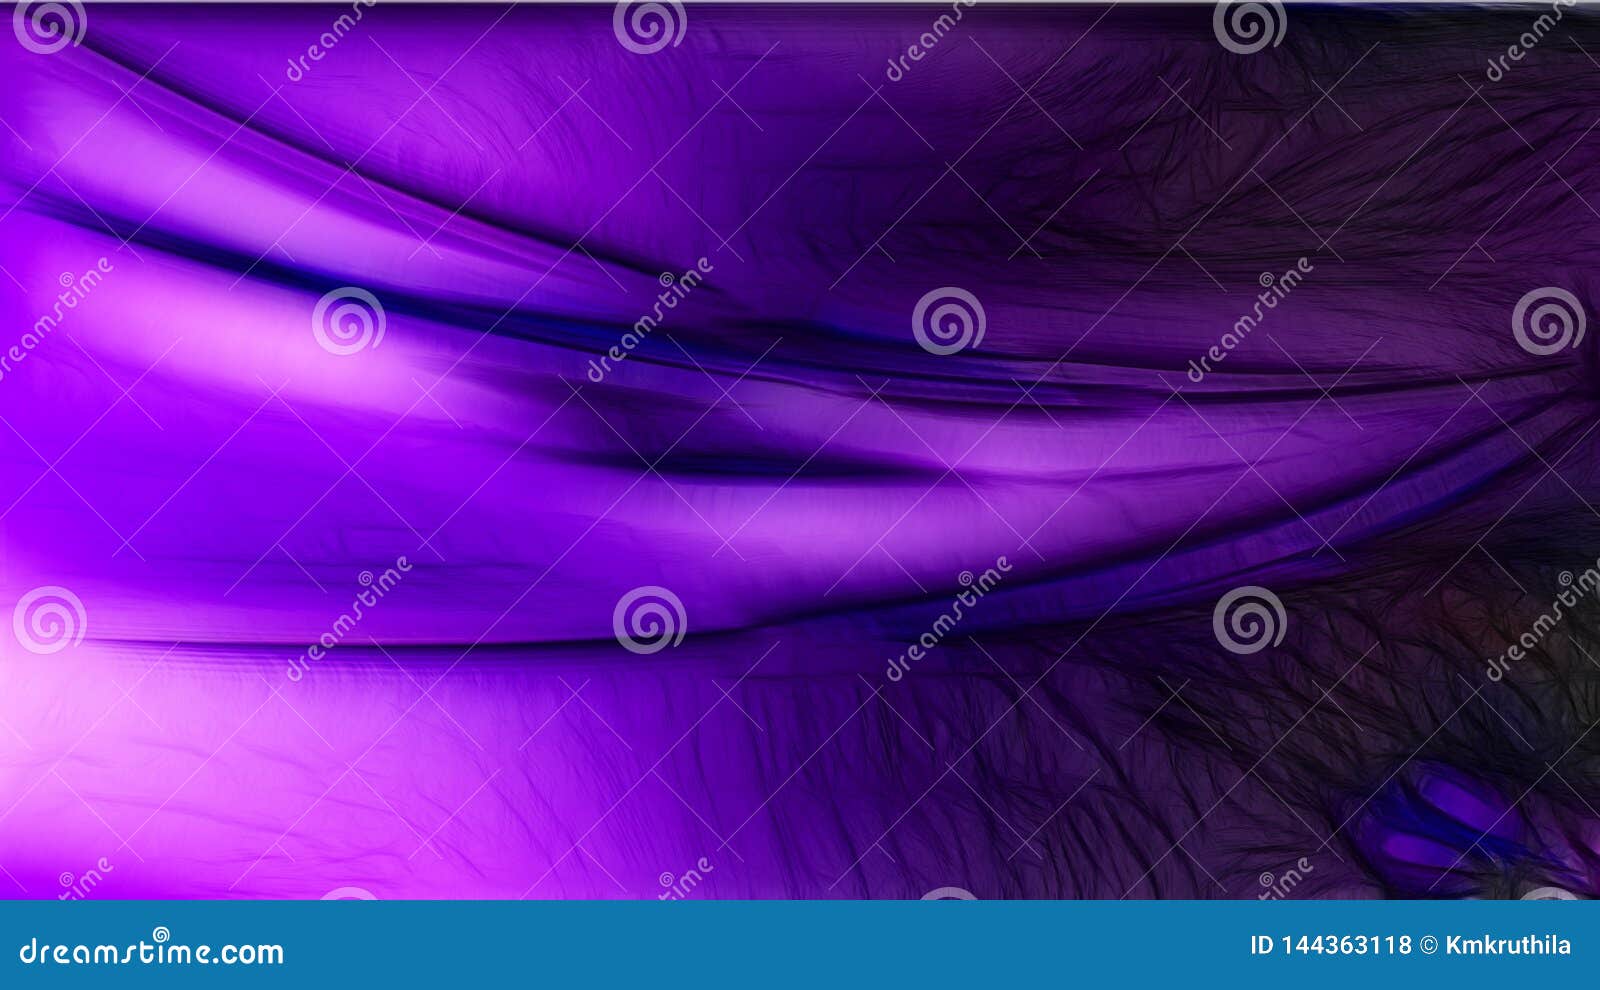 Cool Purple Texture Background Beautiful elegant Illustration graphic art design